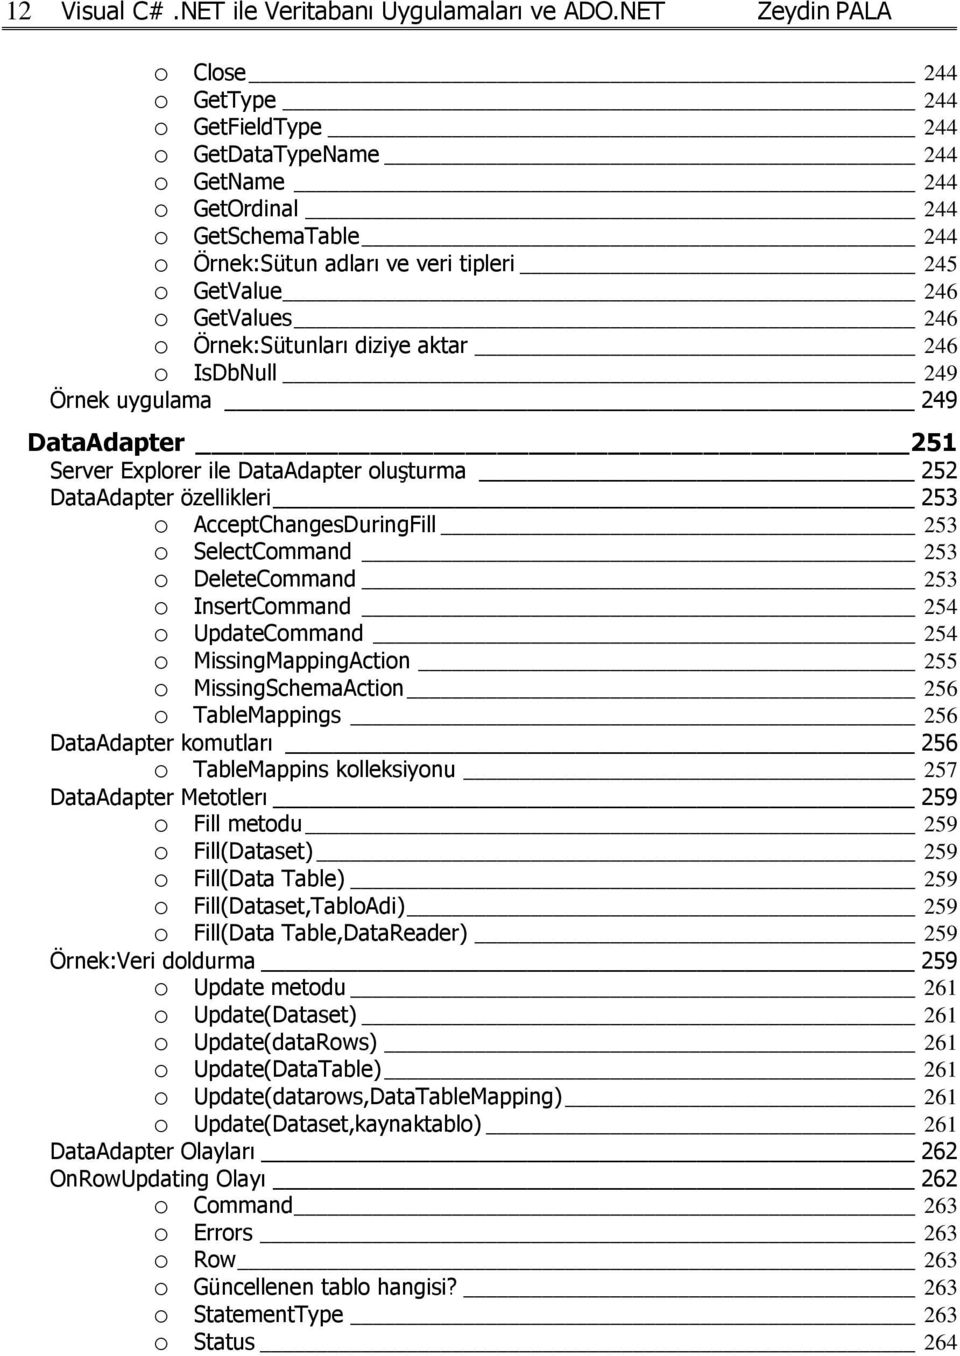 GetValues 246 o Örnek:Sütunları diziye aktar 246 o IsDbNull 249 Örnek uygulama 249 DataAdapter 251 Server Explorer ile DataAdapter oluşturma 252 DataAdapter özellikleri 253 o AcceptChangesDuringFill